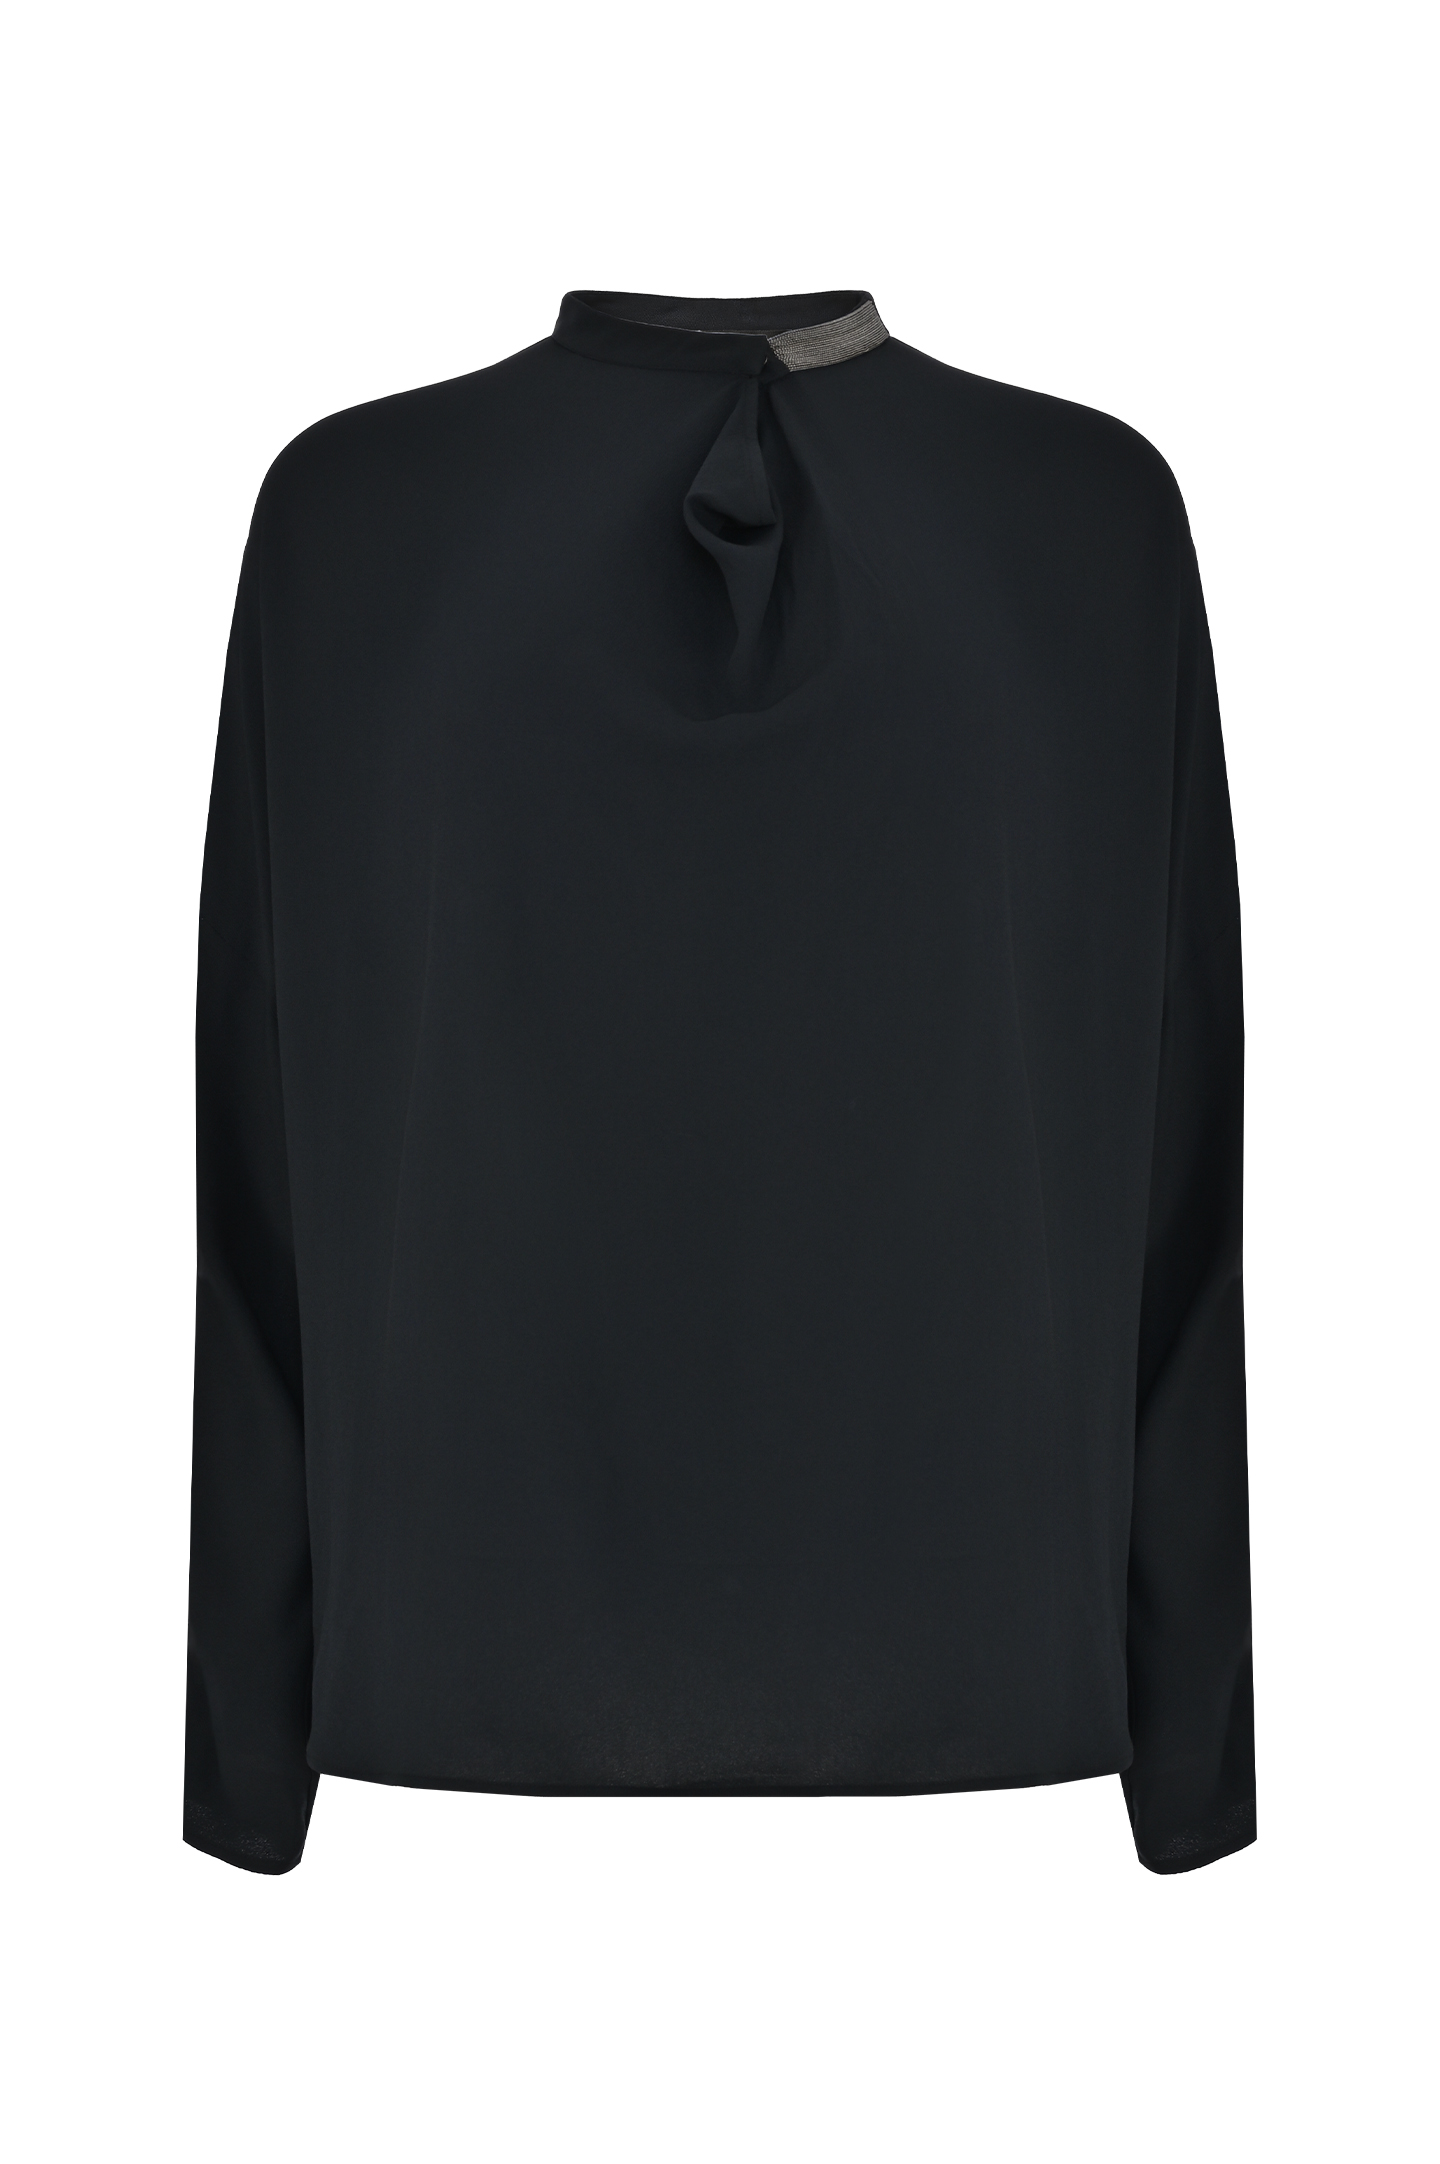 Блуза FABIANA FILIPPI TPD223F597, цвет: Черный, Женский